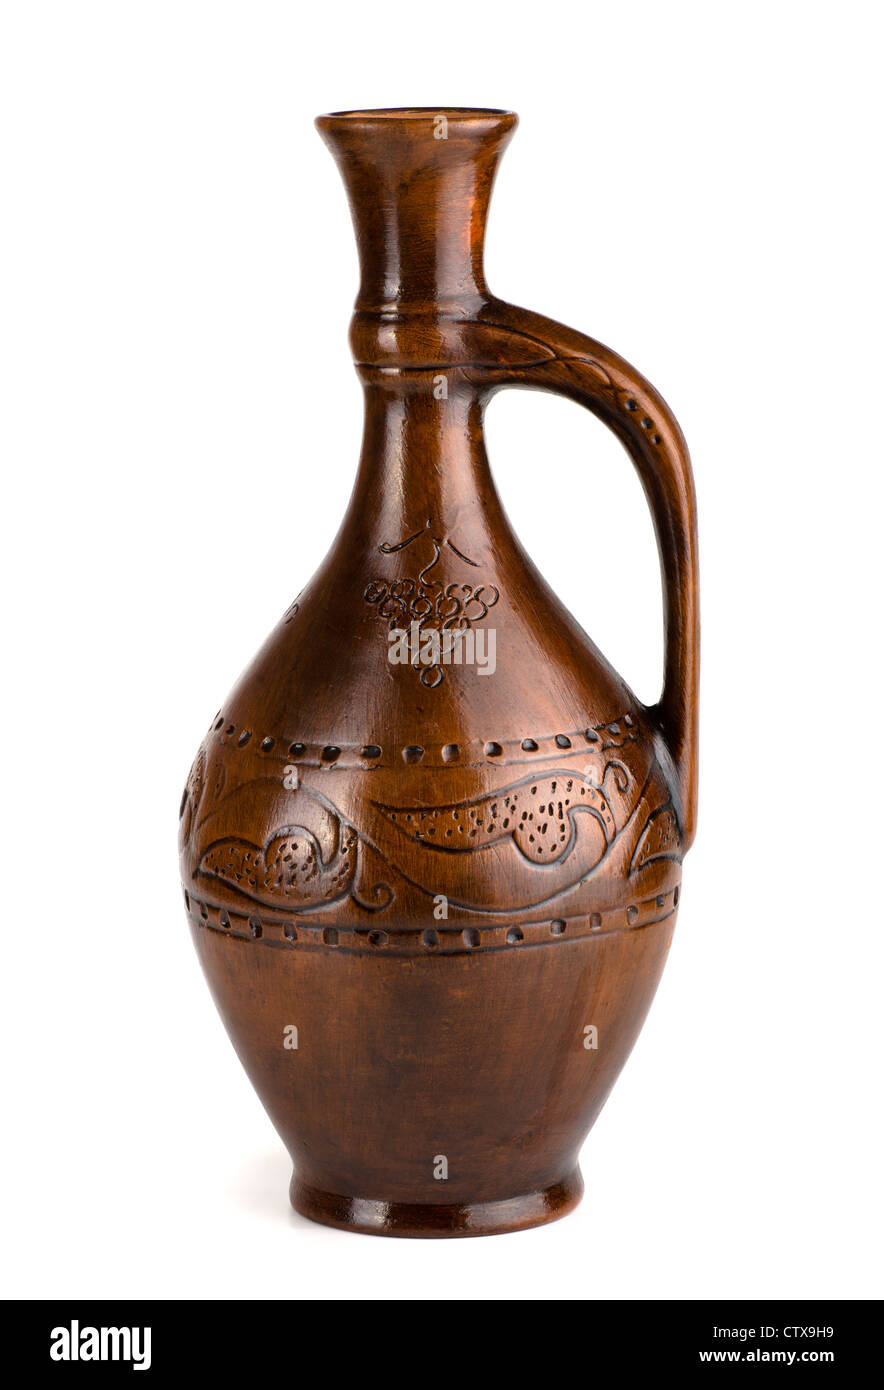 Clay wine jug isolated on white Stock Photo - Alamy